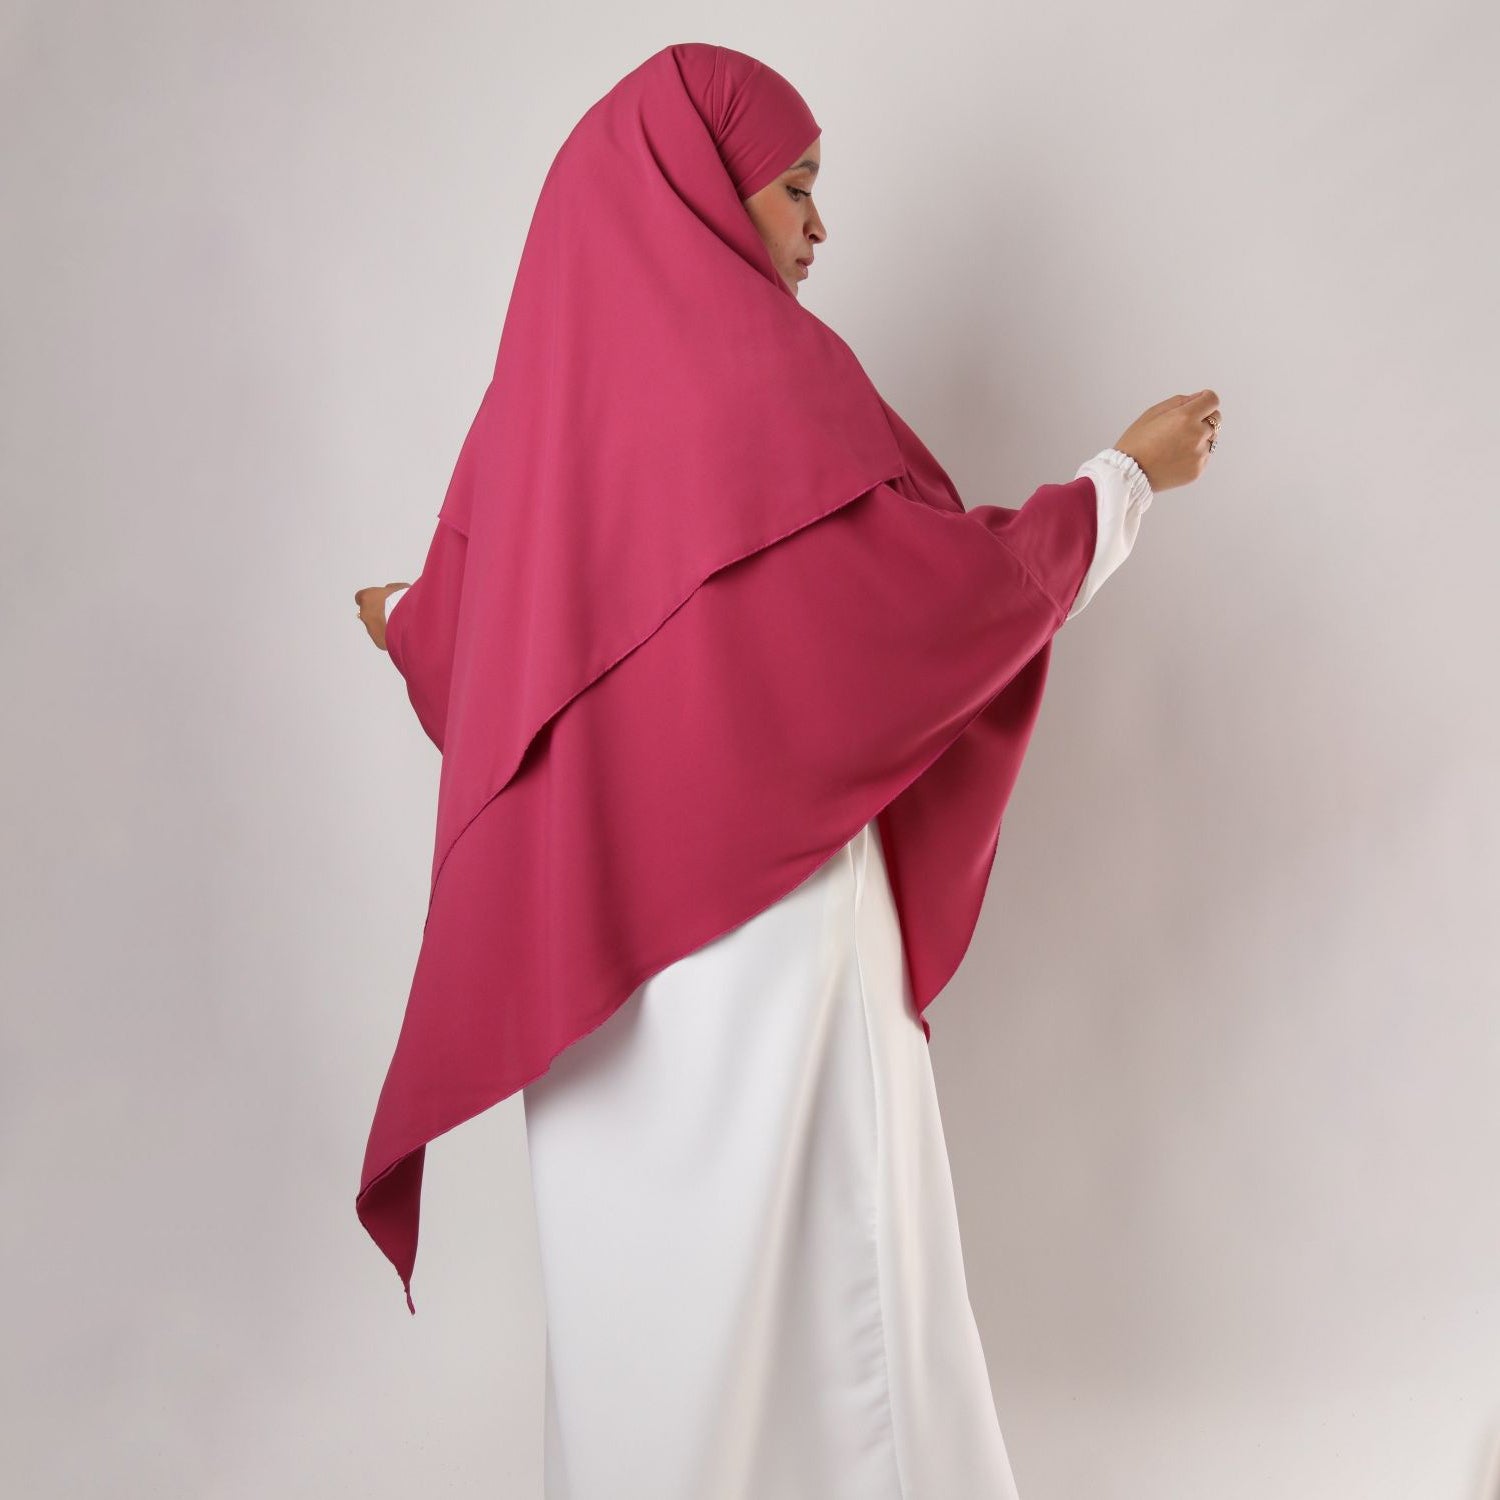 Khimar : 2 Layer Triangular Diamond Instant Khimar-Hijab-Jilbab for Girls & Women in Maroon Color | Tie Back Burkha Jilbab Khimar Style Abaya Hijab Niqab Islamic Modest Wear